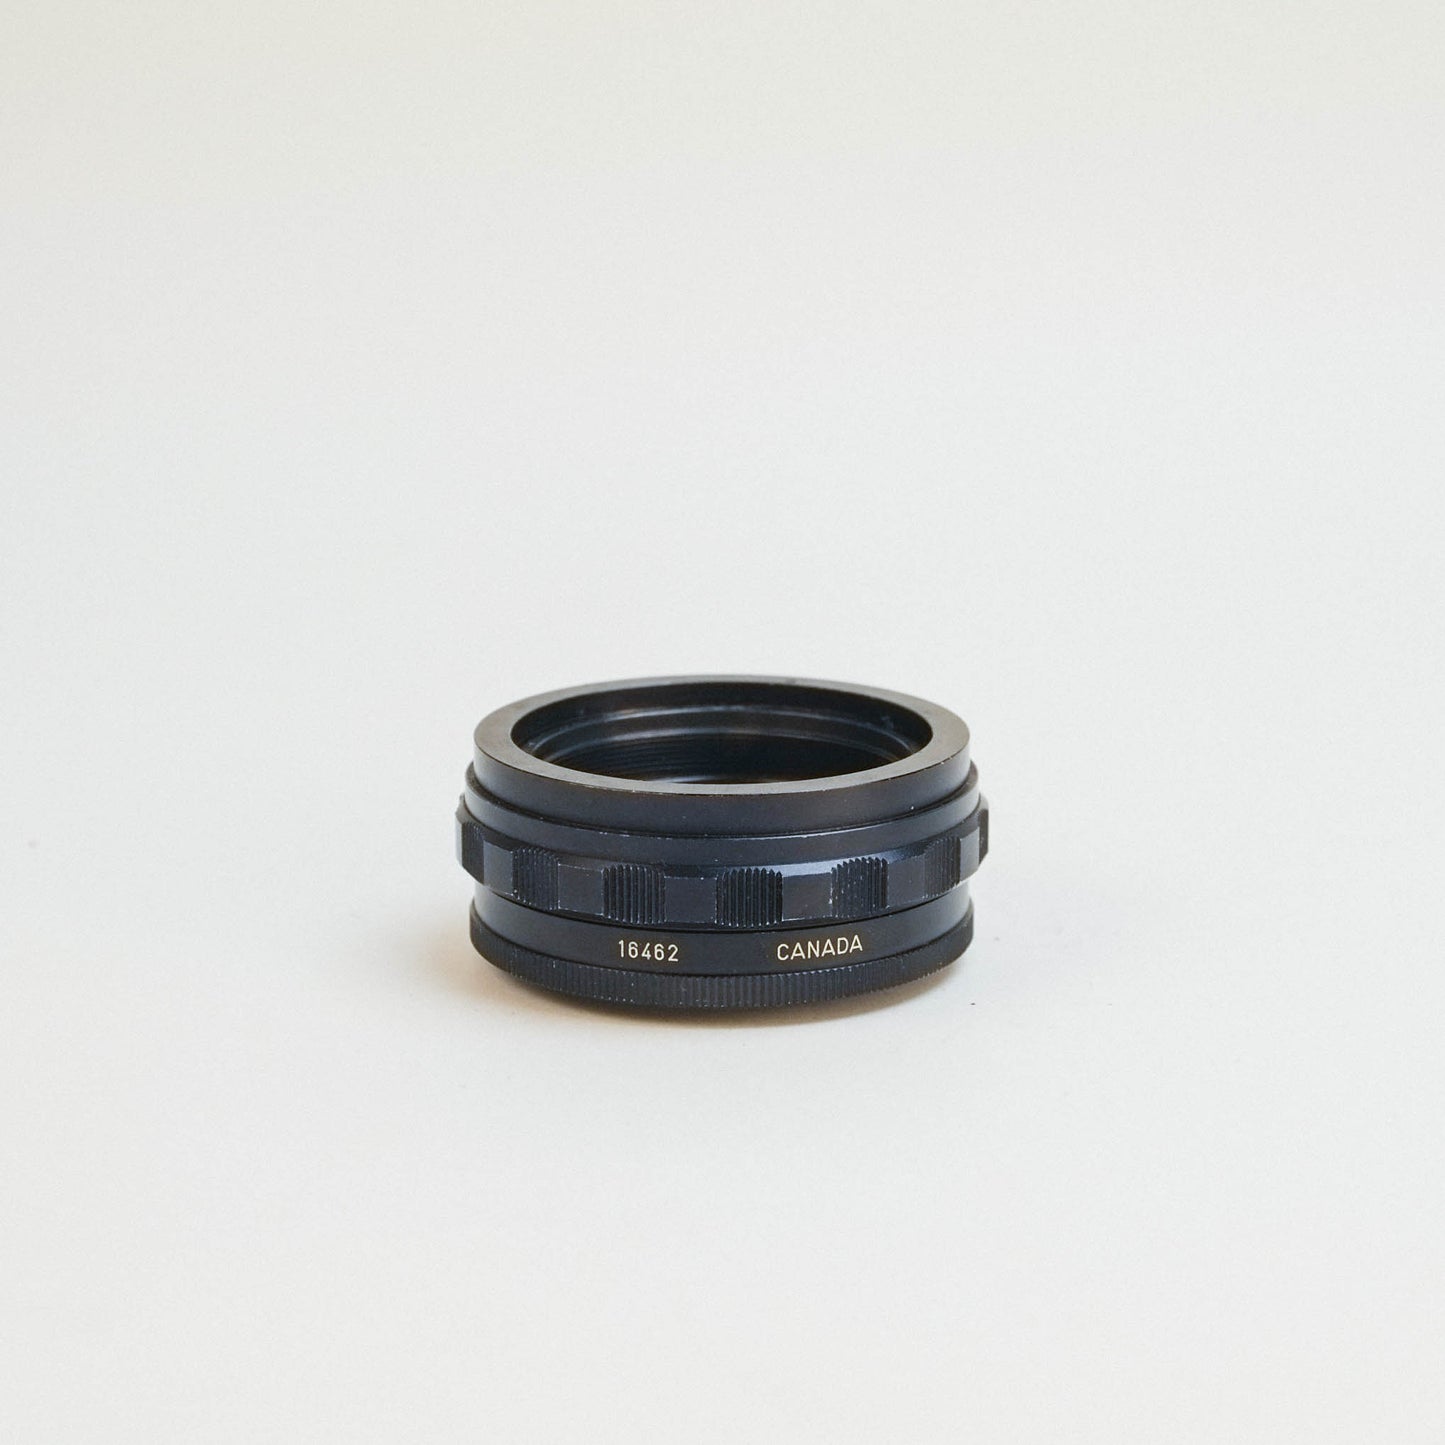 Leica Focusing Mount Adapter (16462)